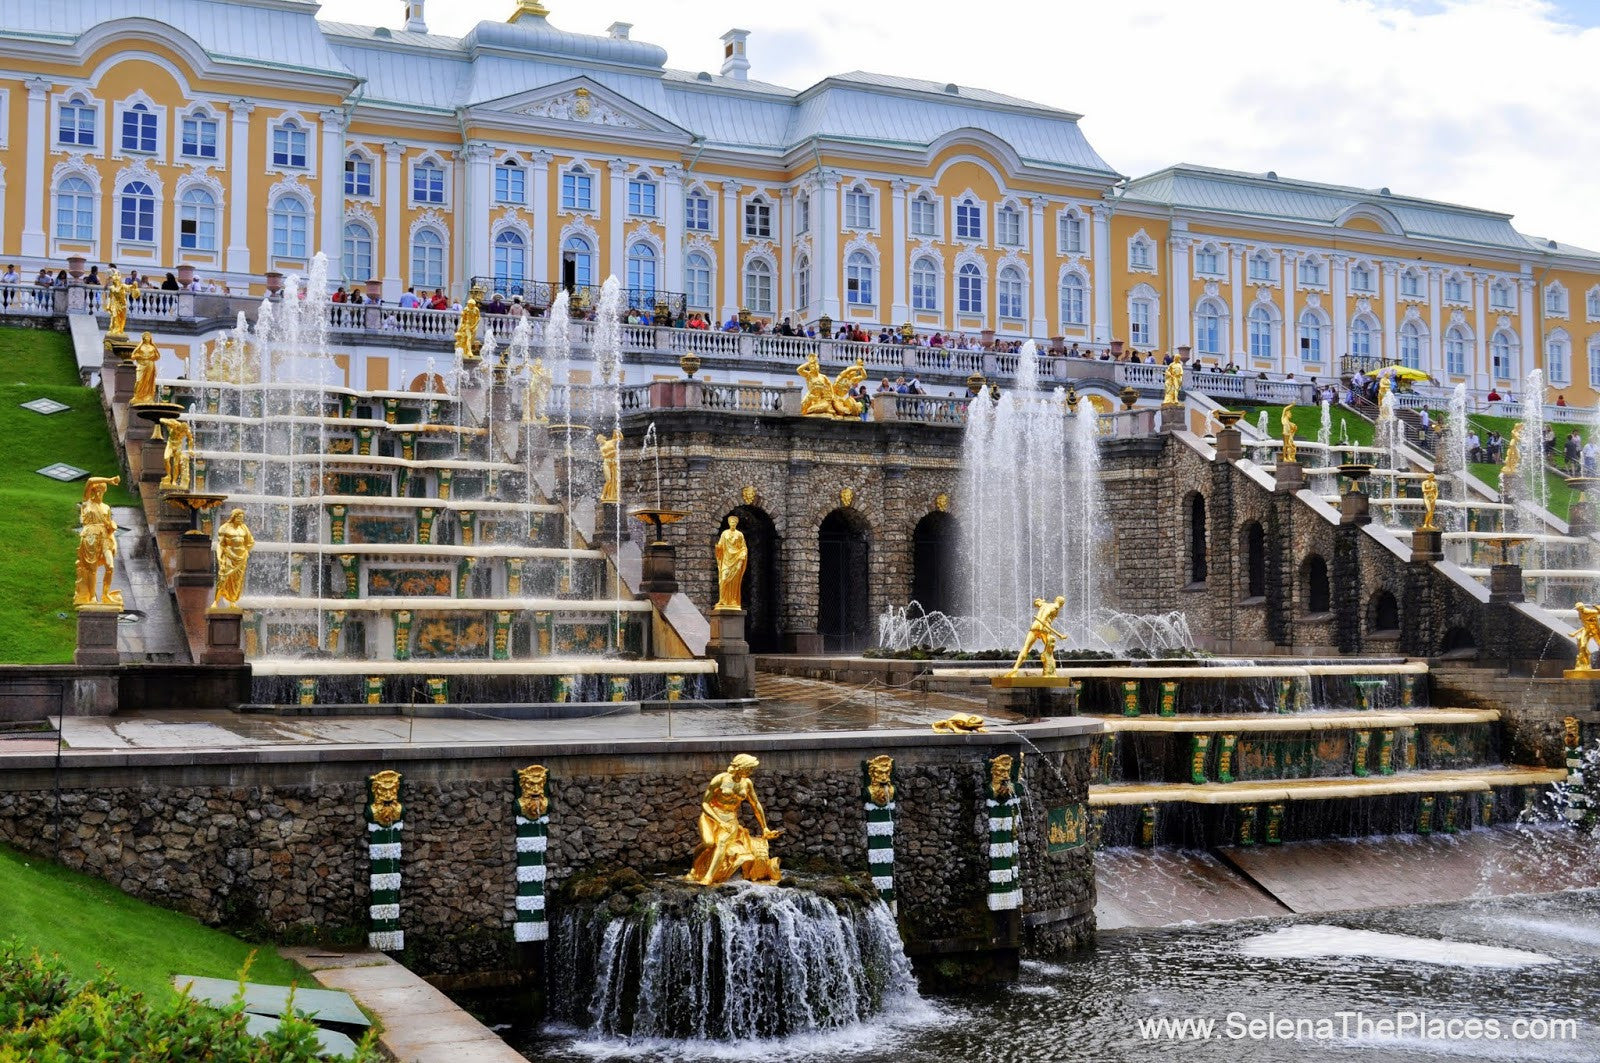 Peterhof Palace in Russia